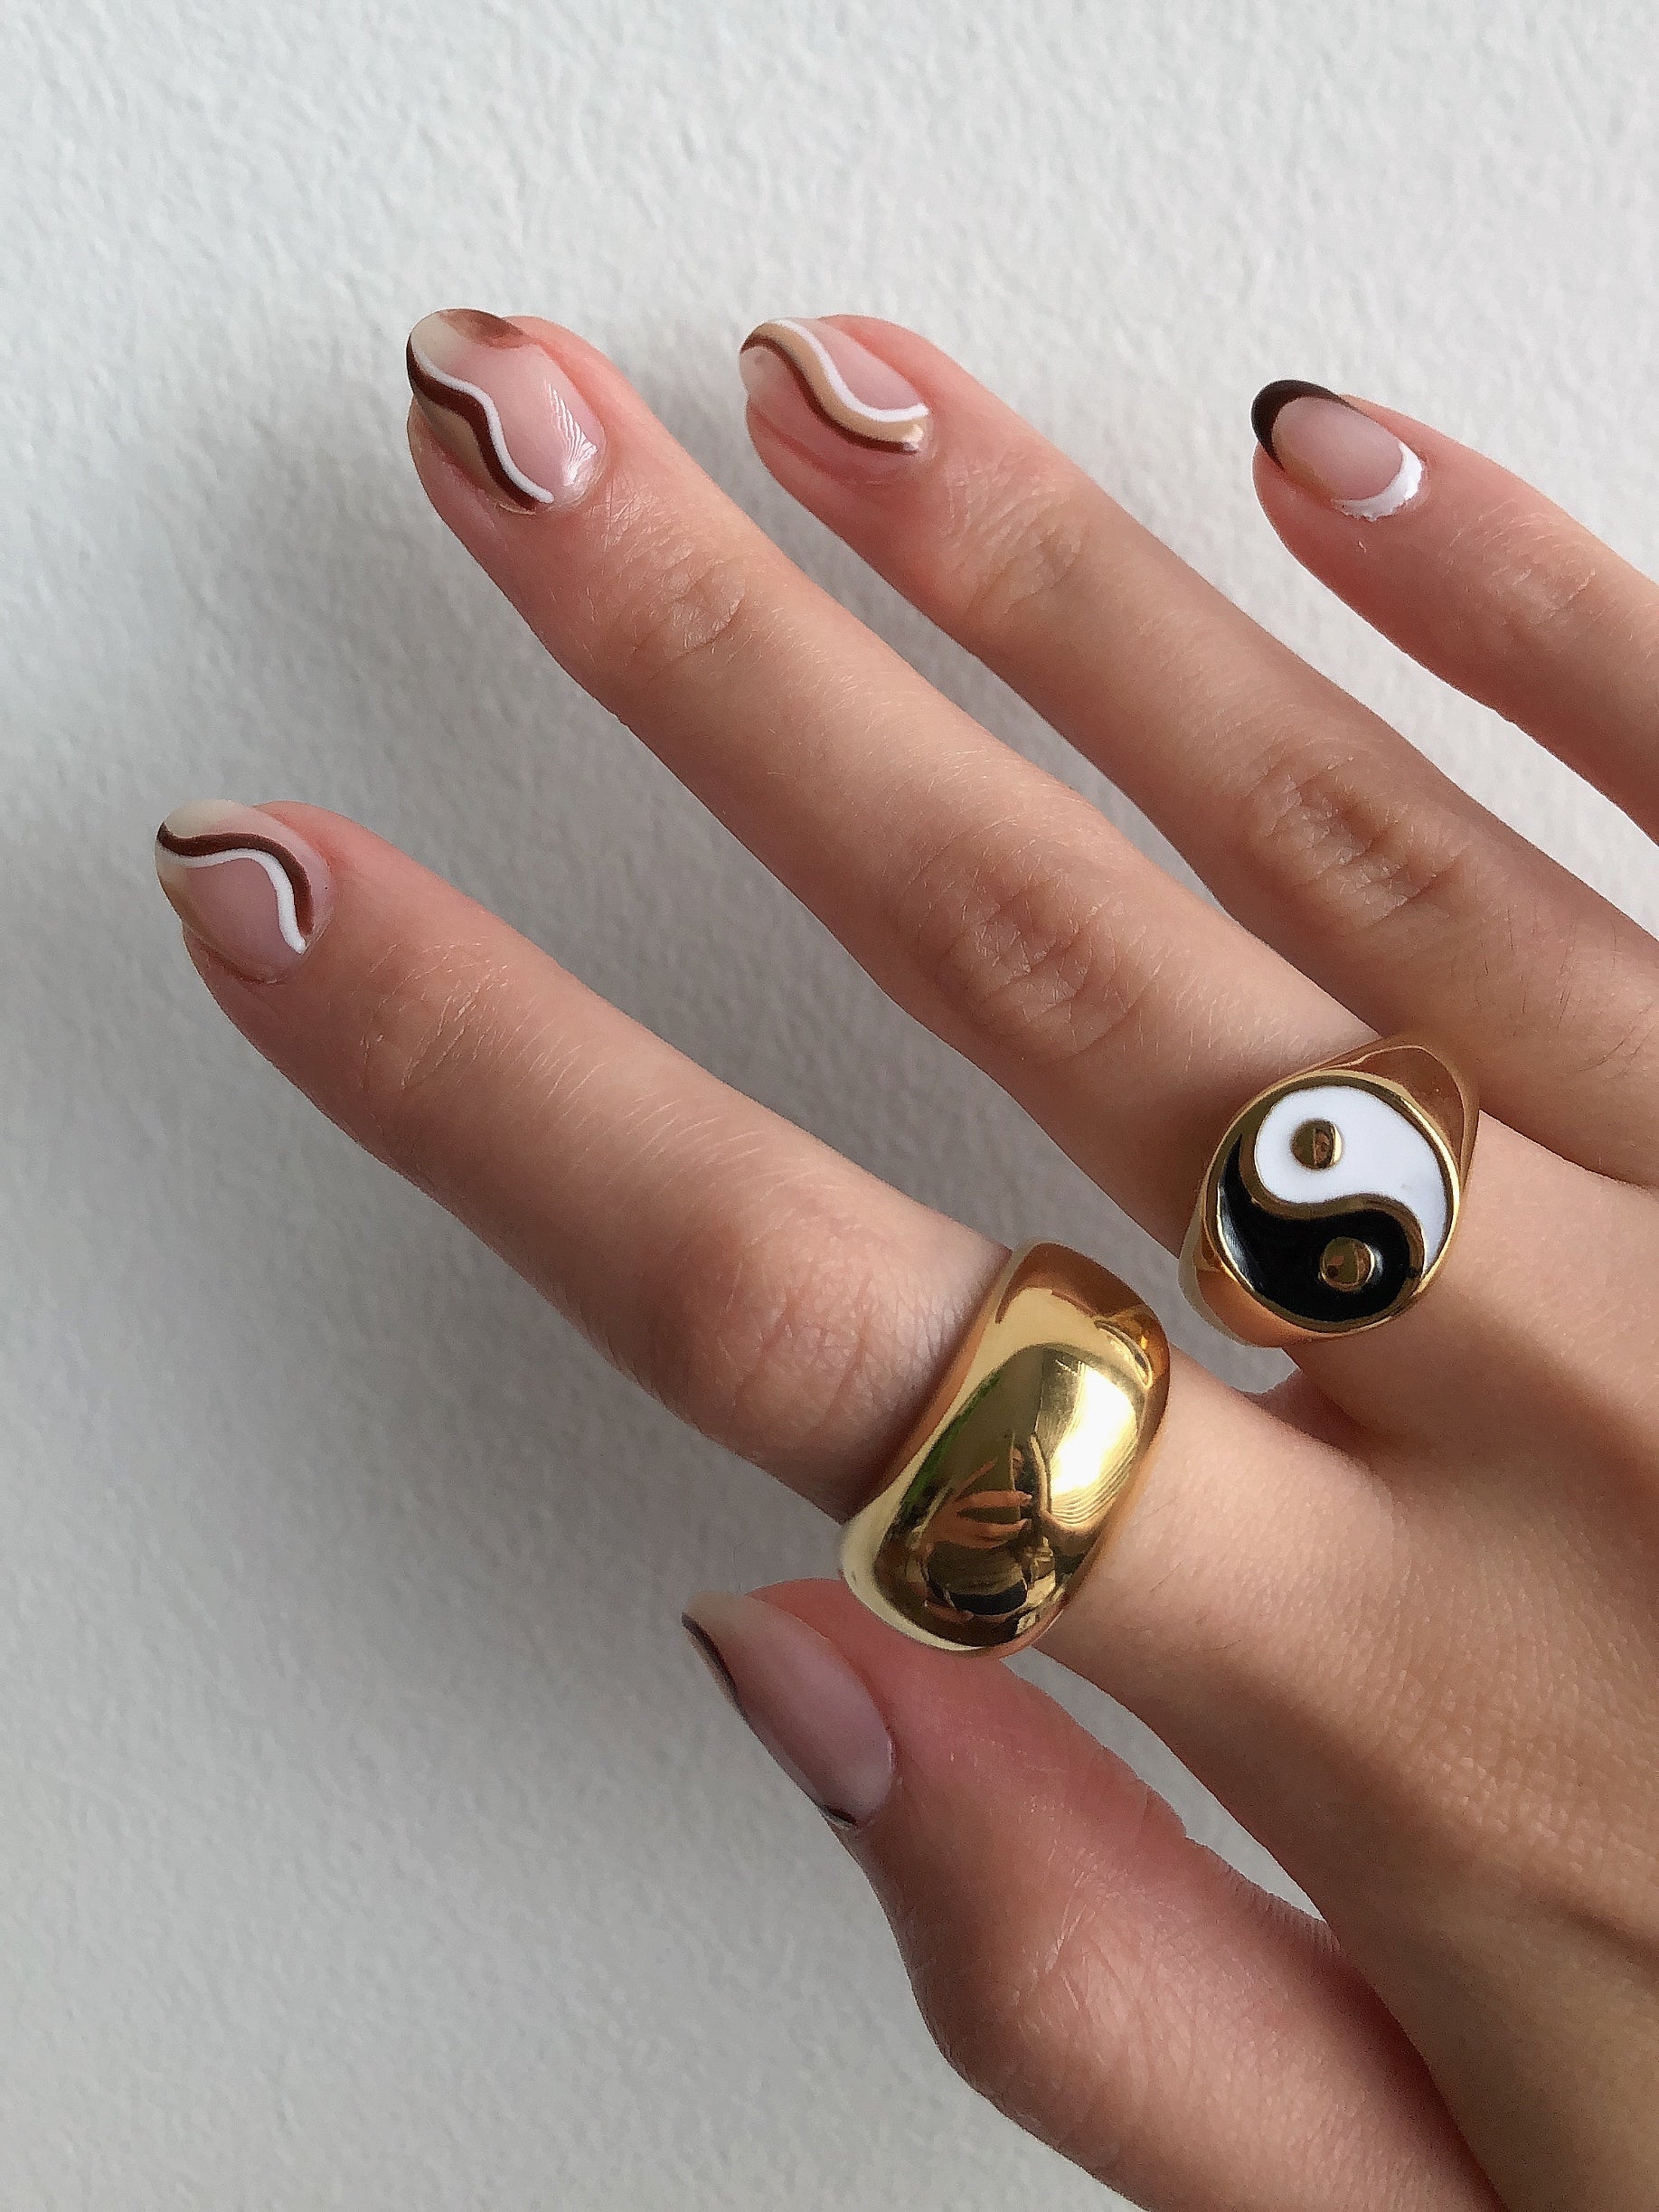 Yin Yang Ring from Third Tone jewelry. Trendy jewelry. 